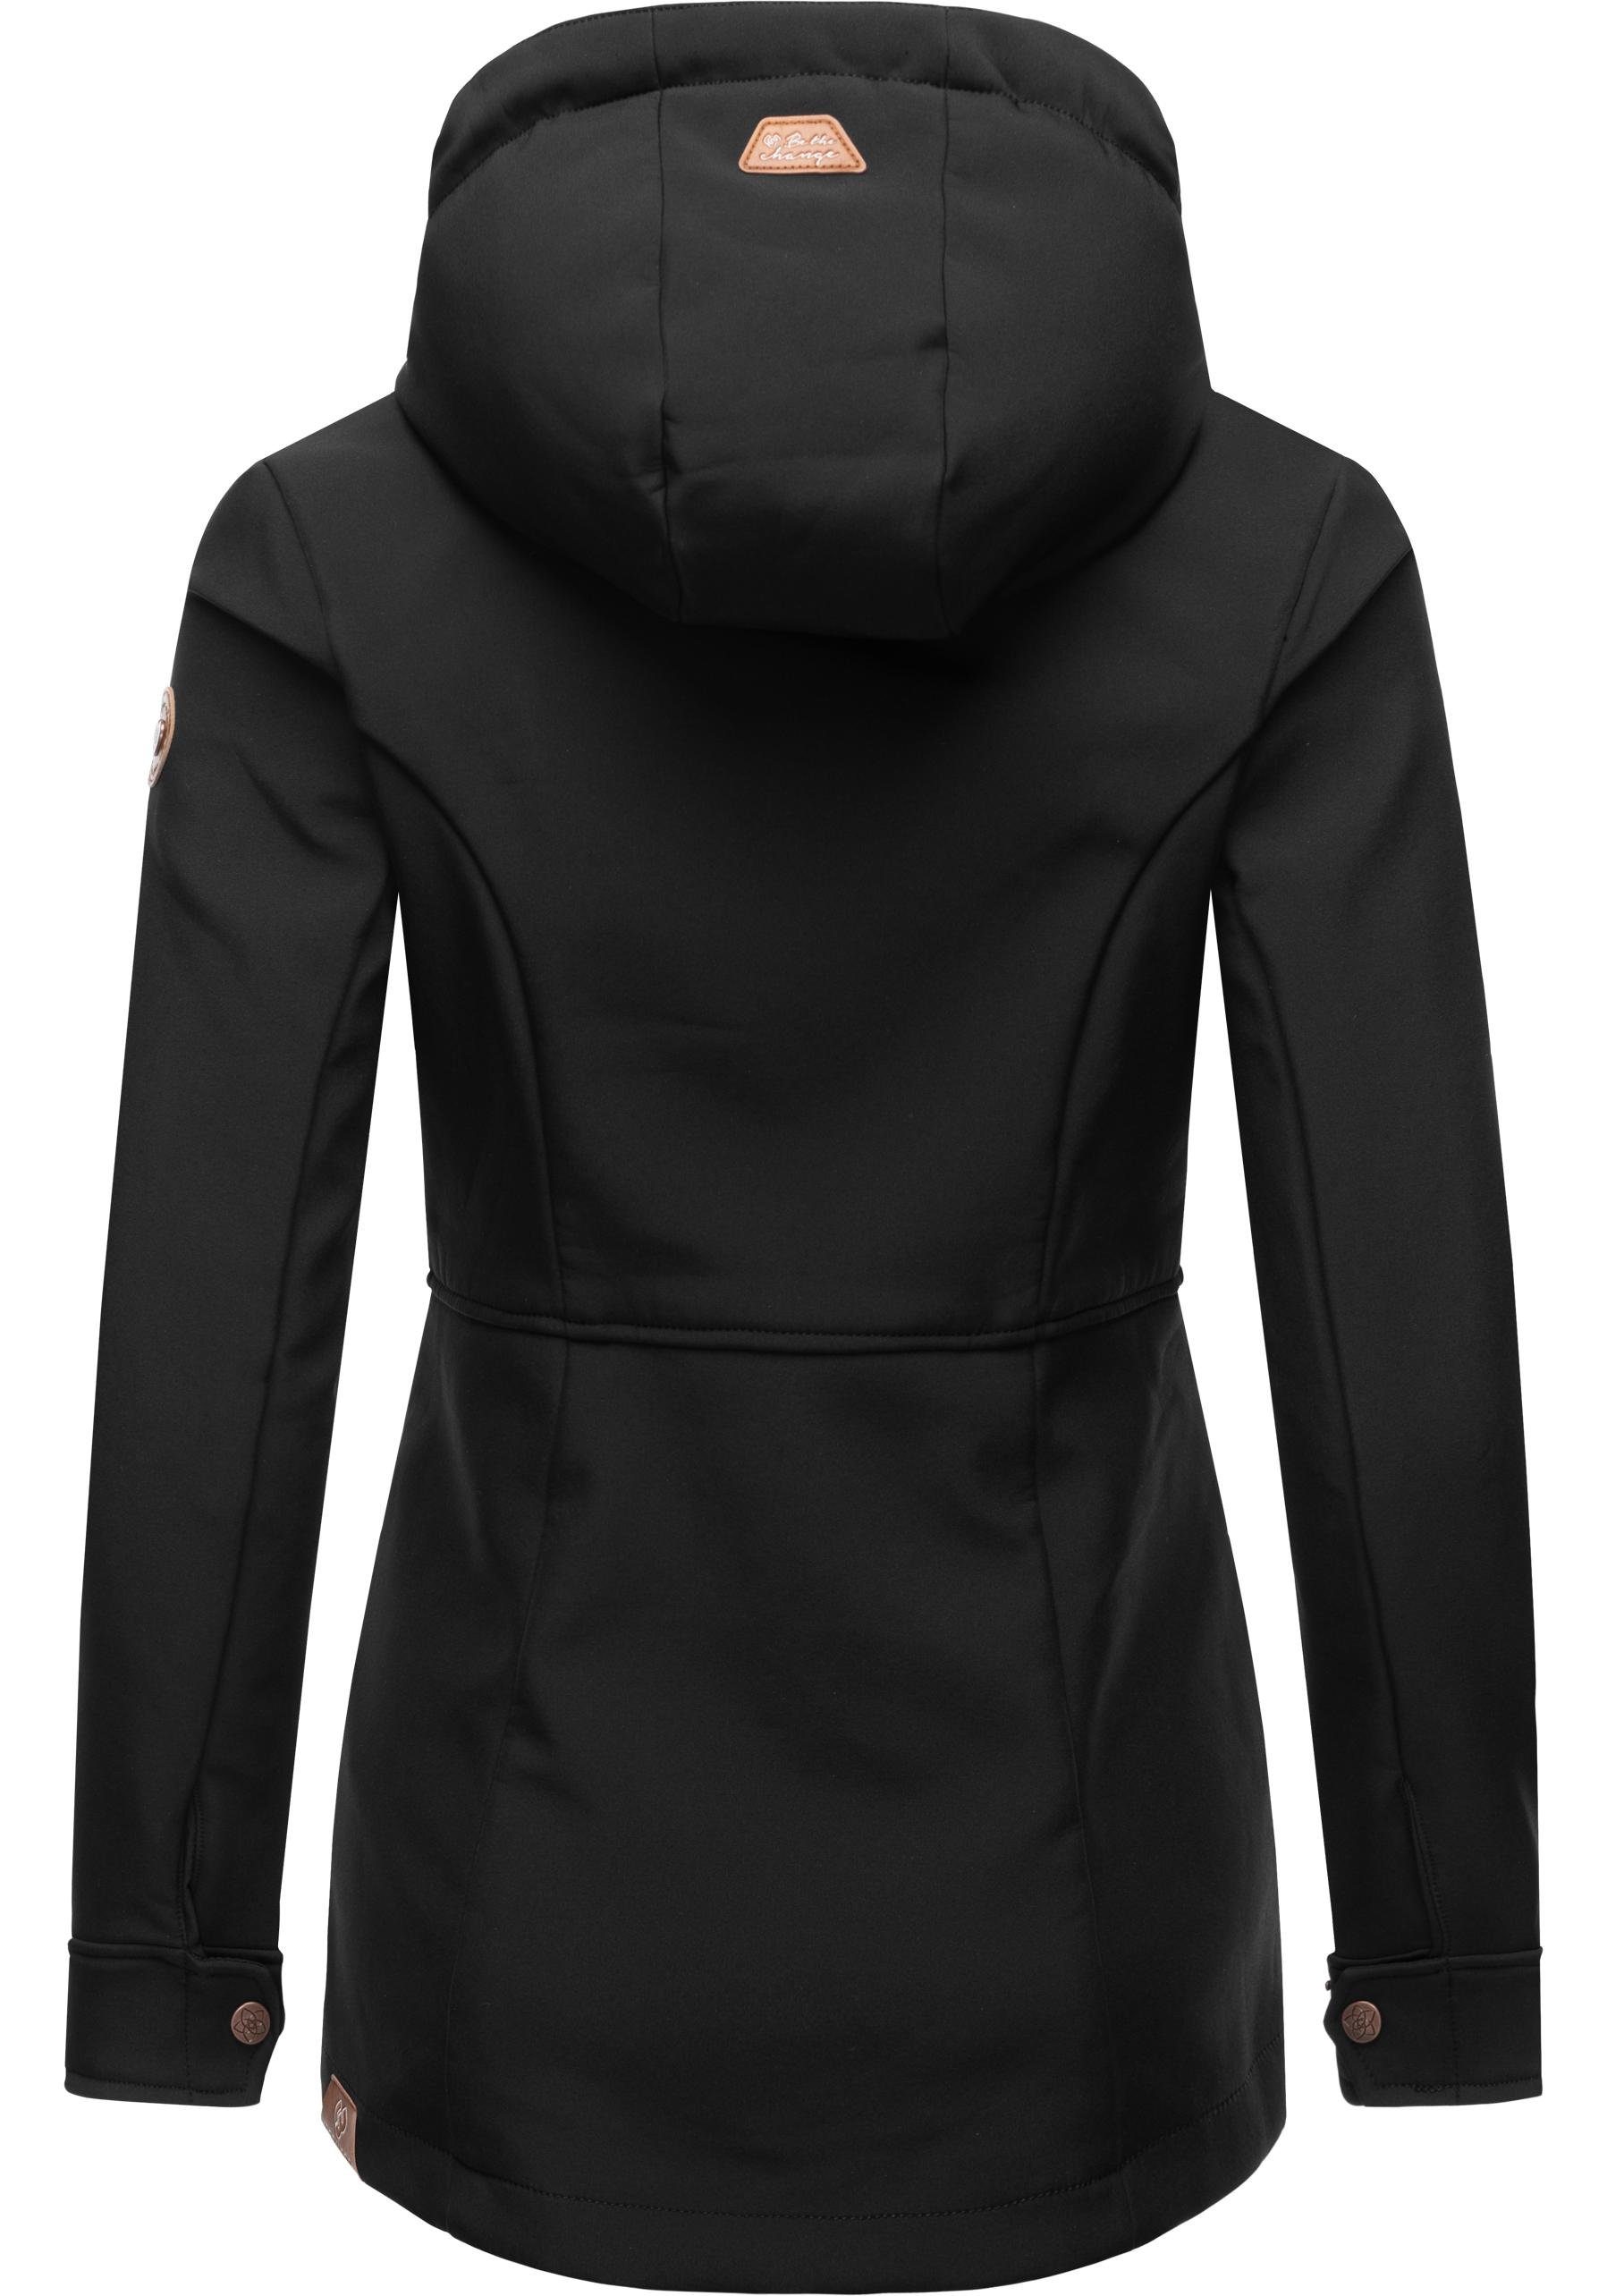 Softshelljacke Ragwear Yba schwarz Outdoorjacke Damen mit sportliche Kapuze